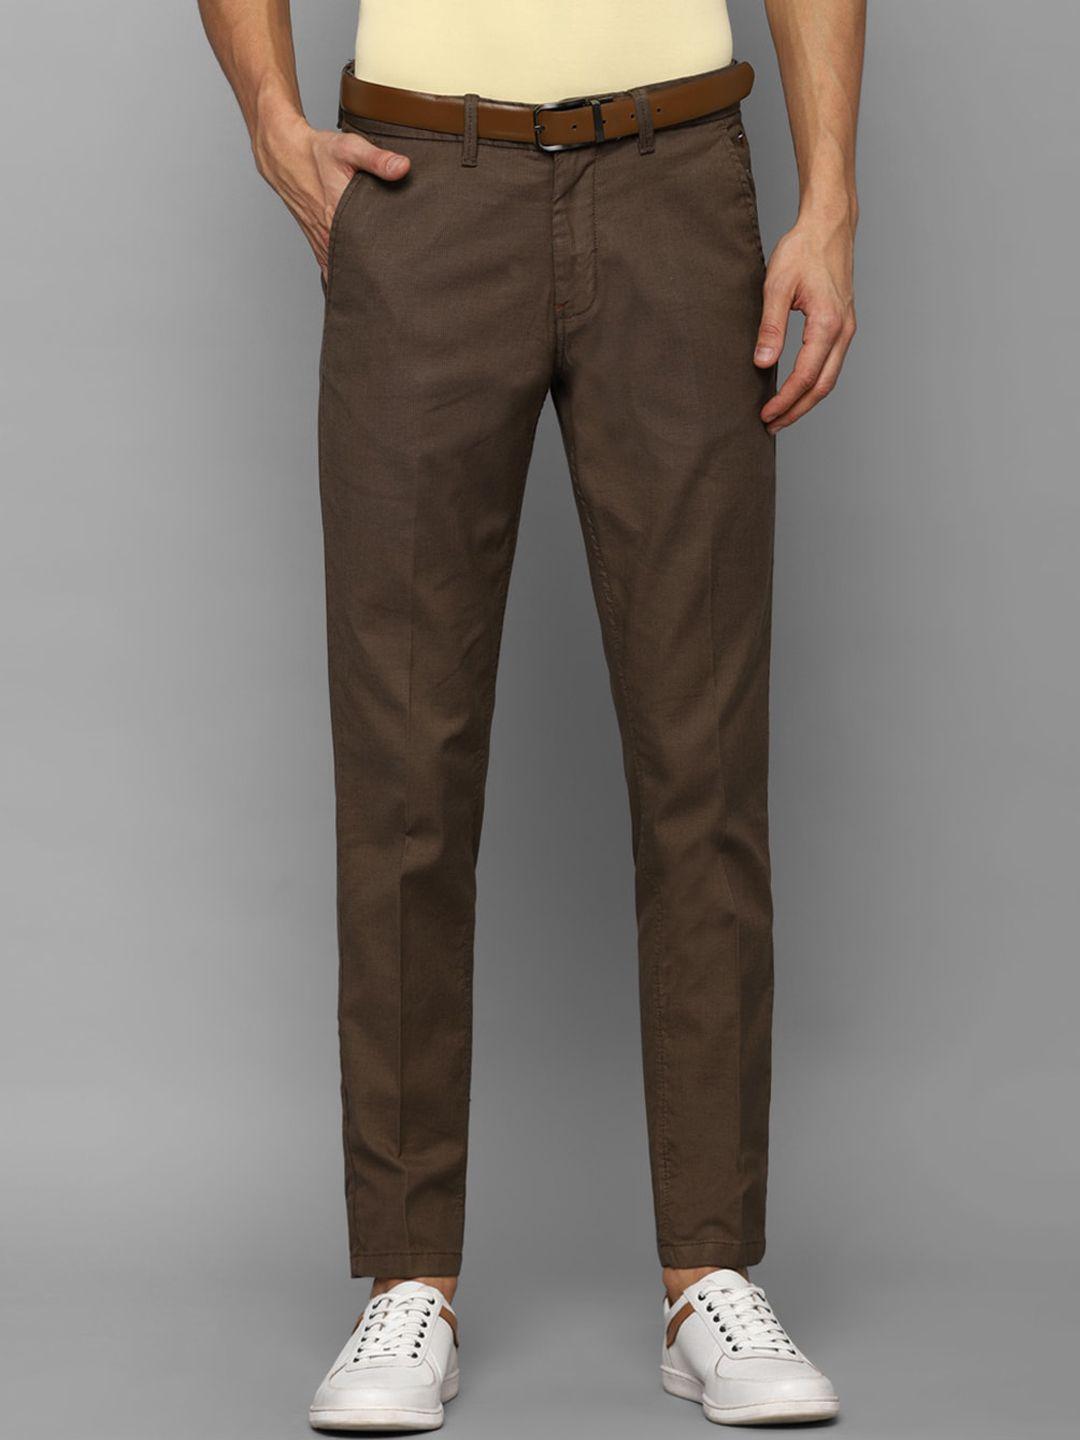 louis philippe sport men brown textured slim fit trousers